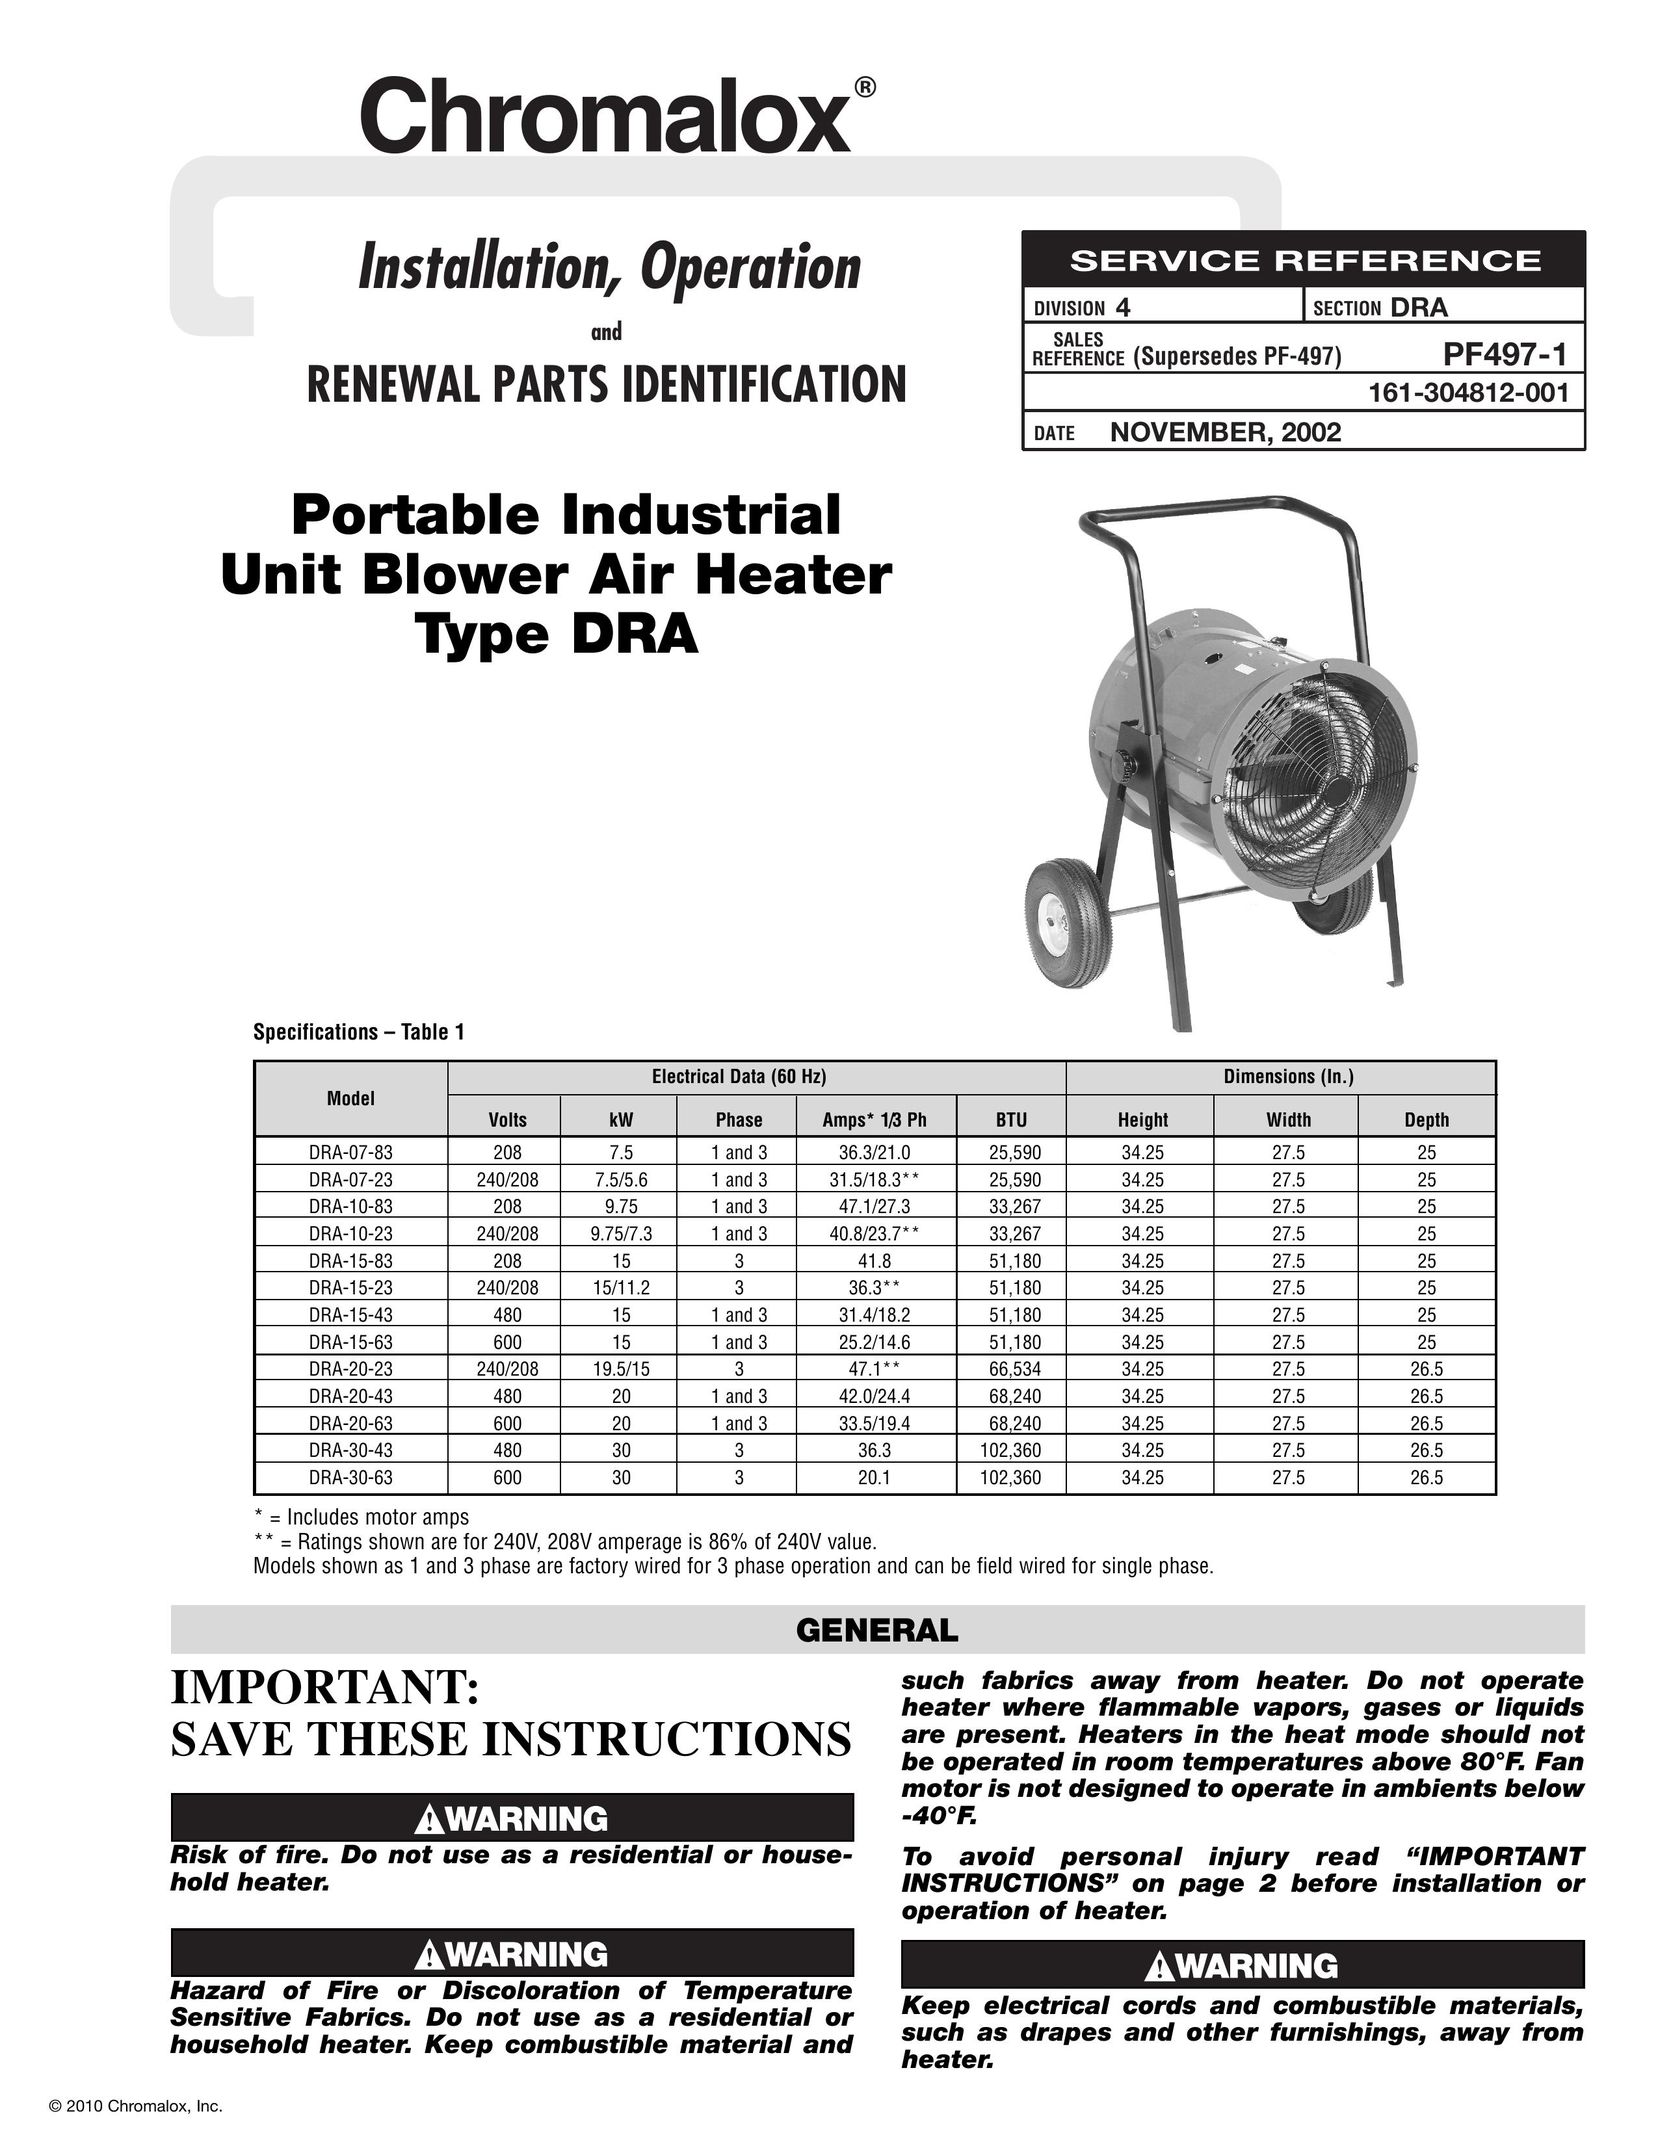 Chromalox PF497-1 Electric Heater User Manual